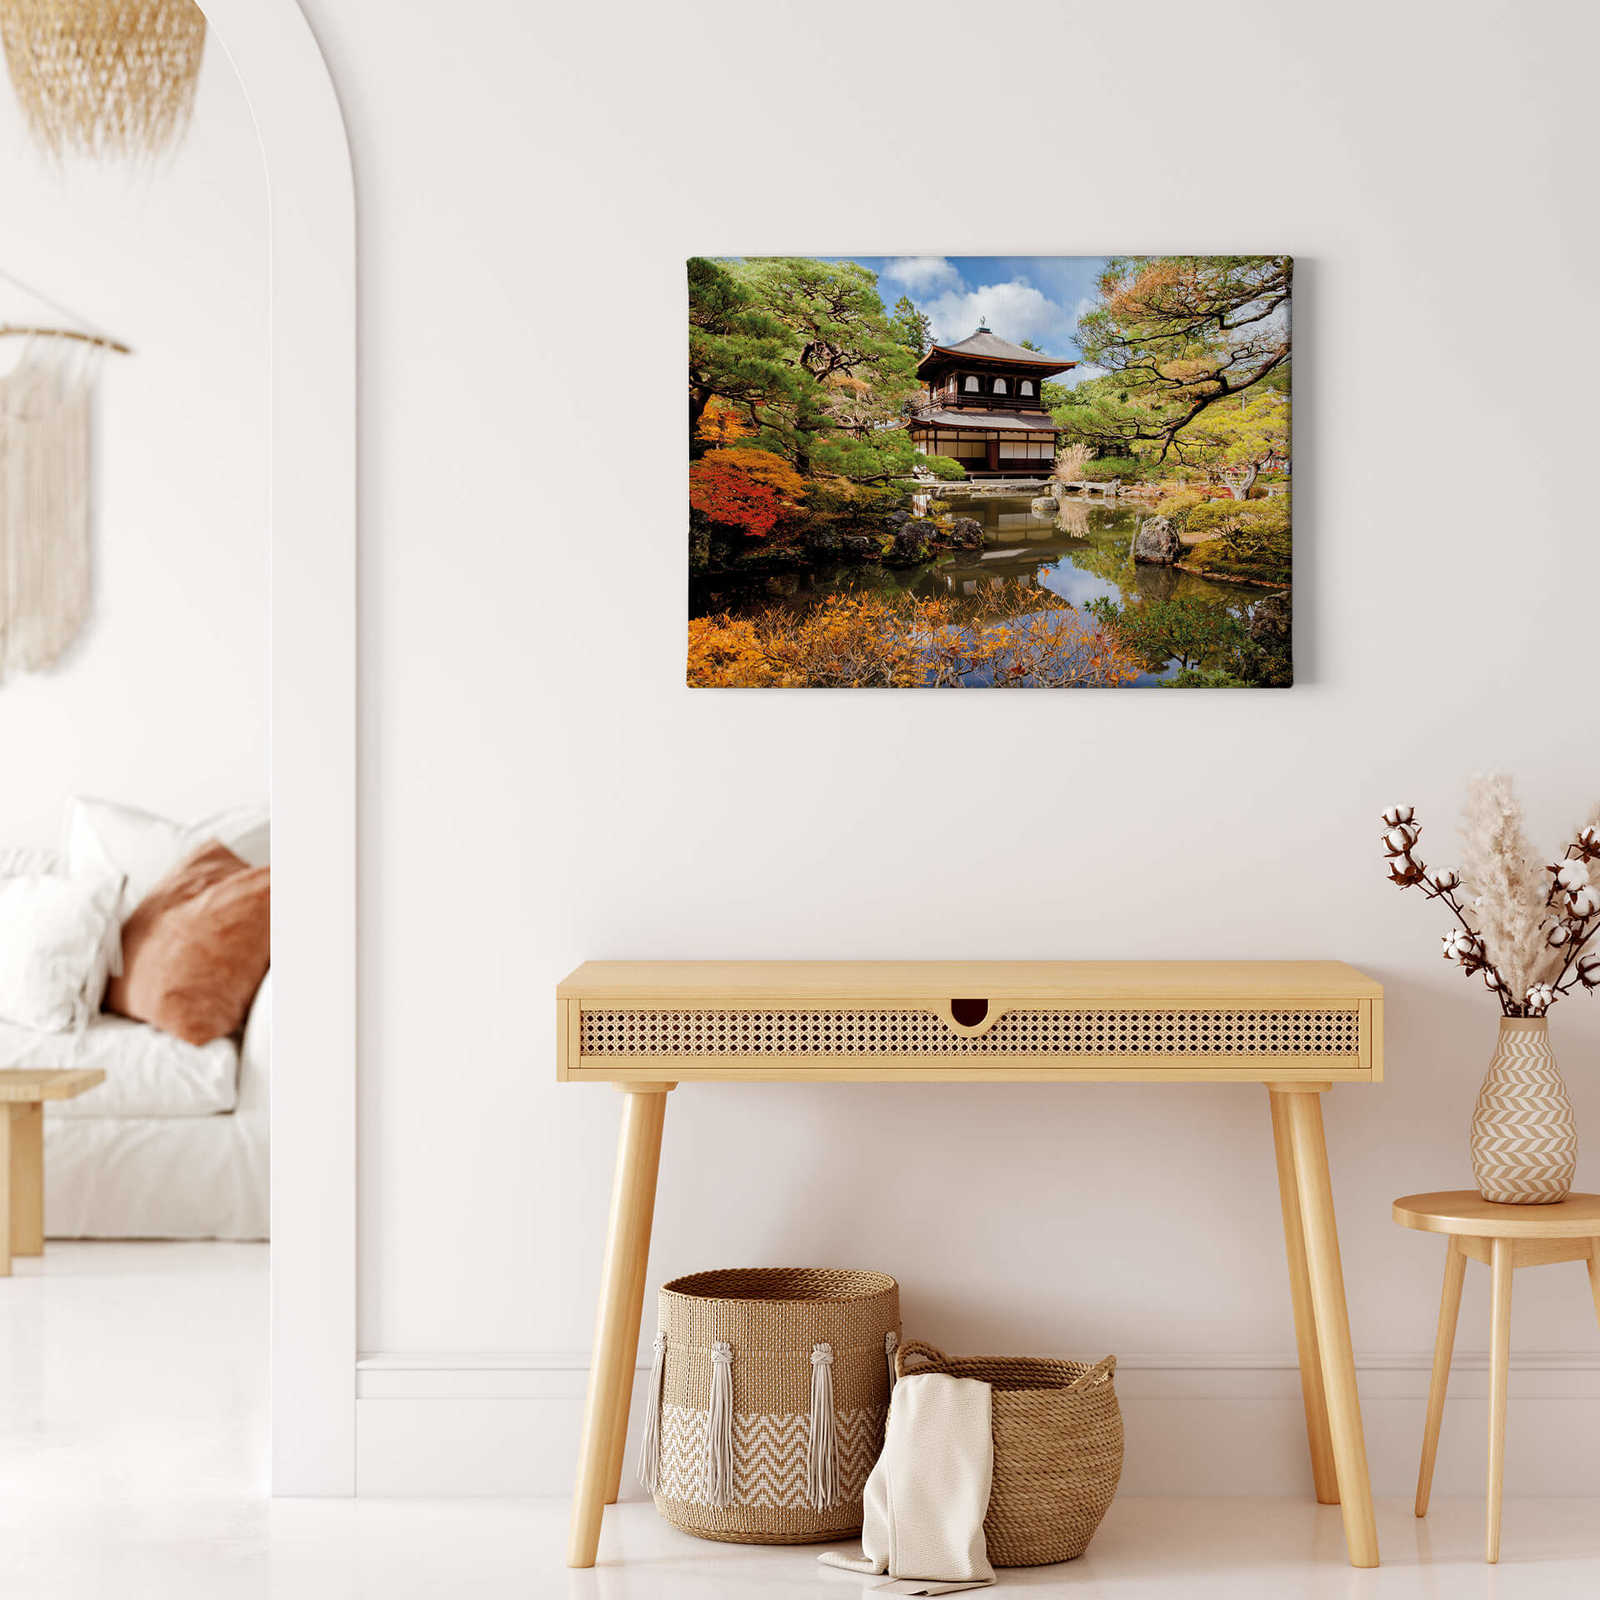             Canvas print Japanese garden with pagoda
        